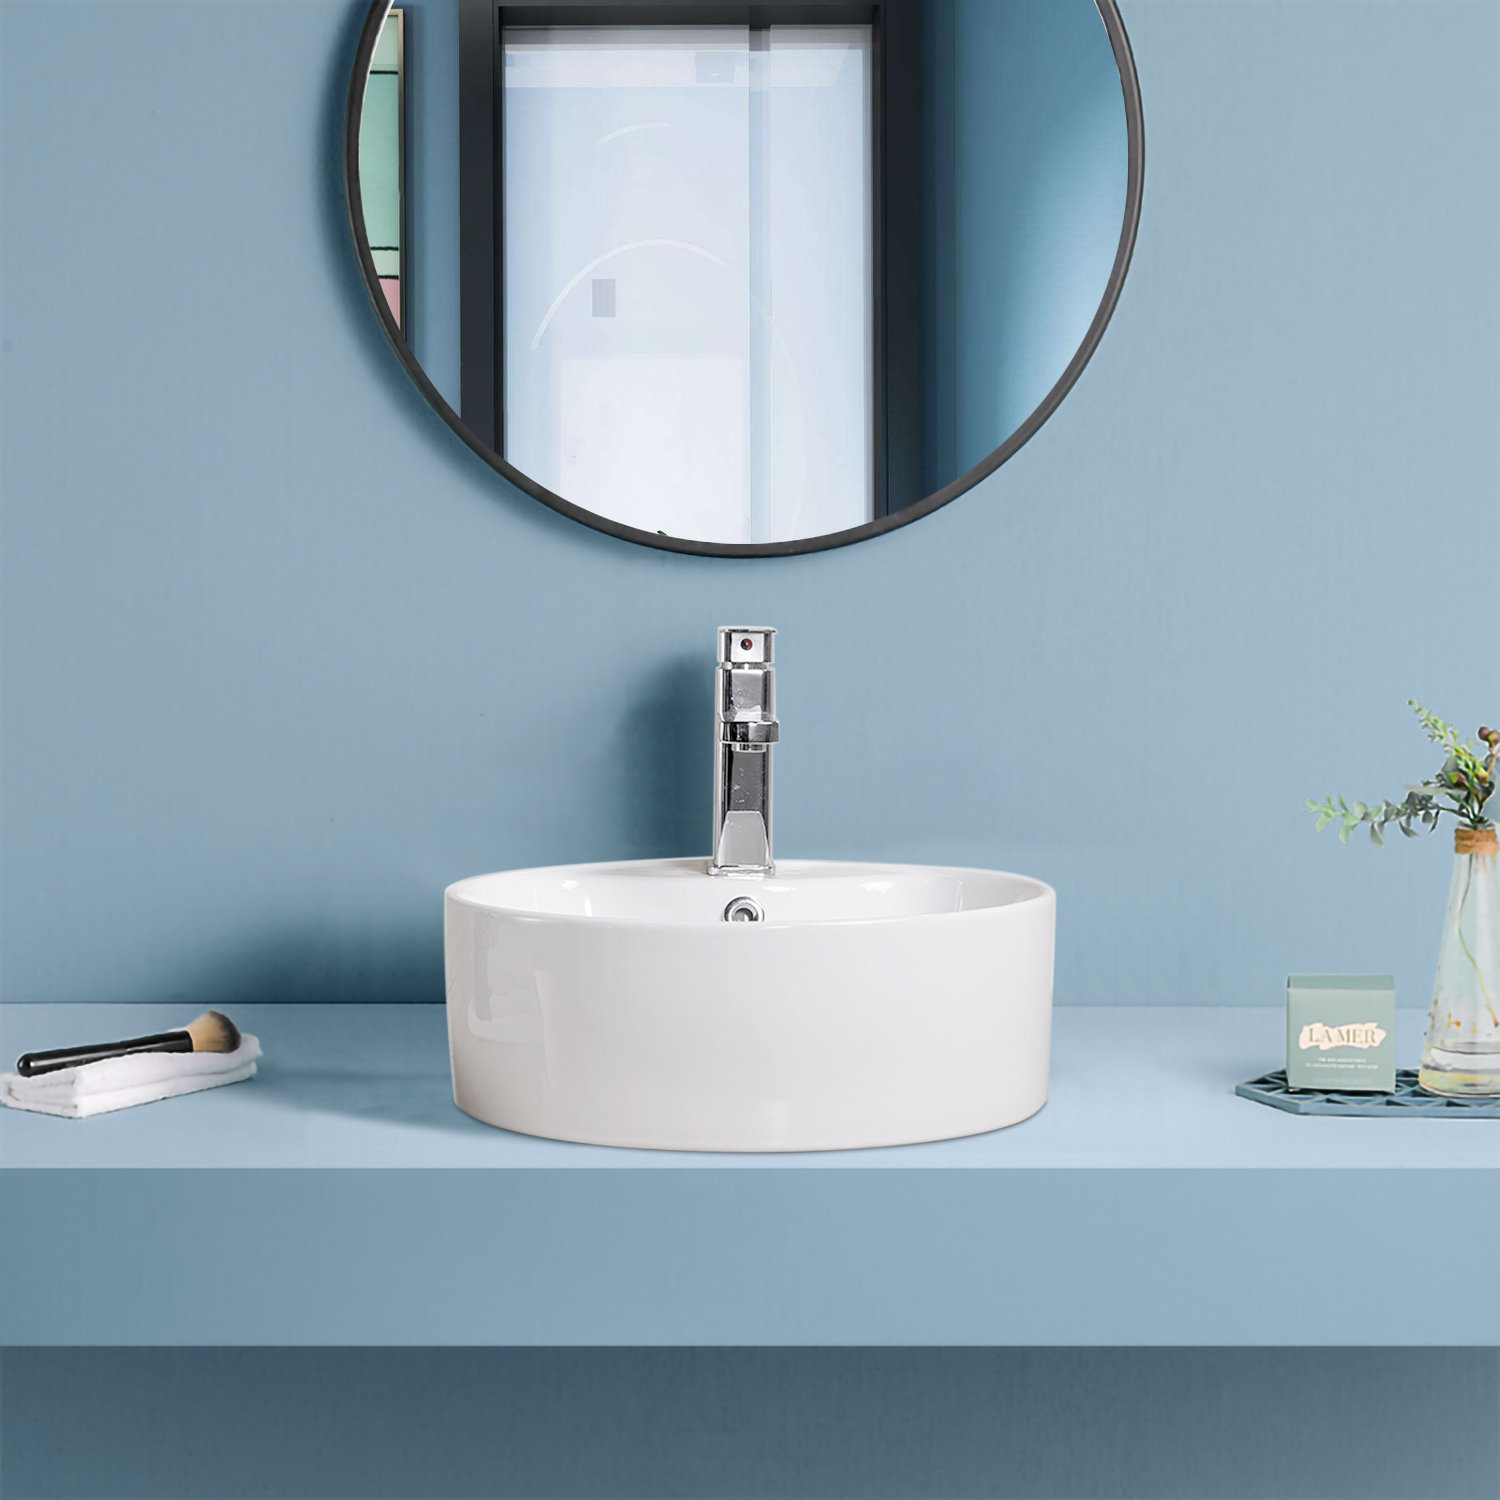 High Grade Ceramic Sanitary Ware Wash Basin Round Bathroom Sink For Hotel